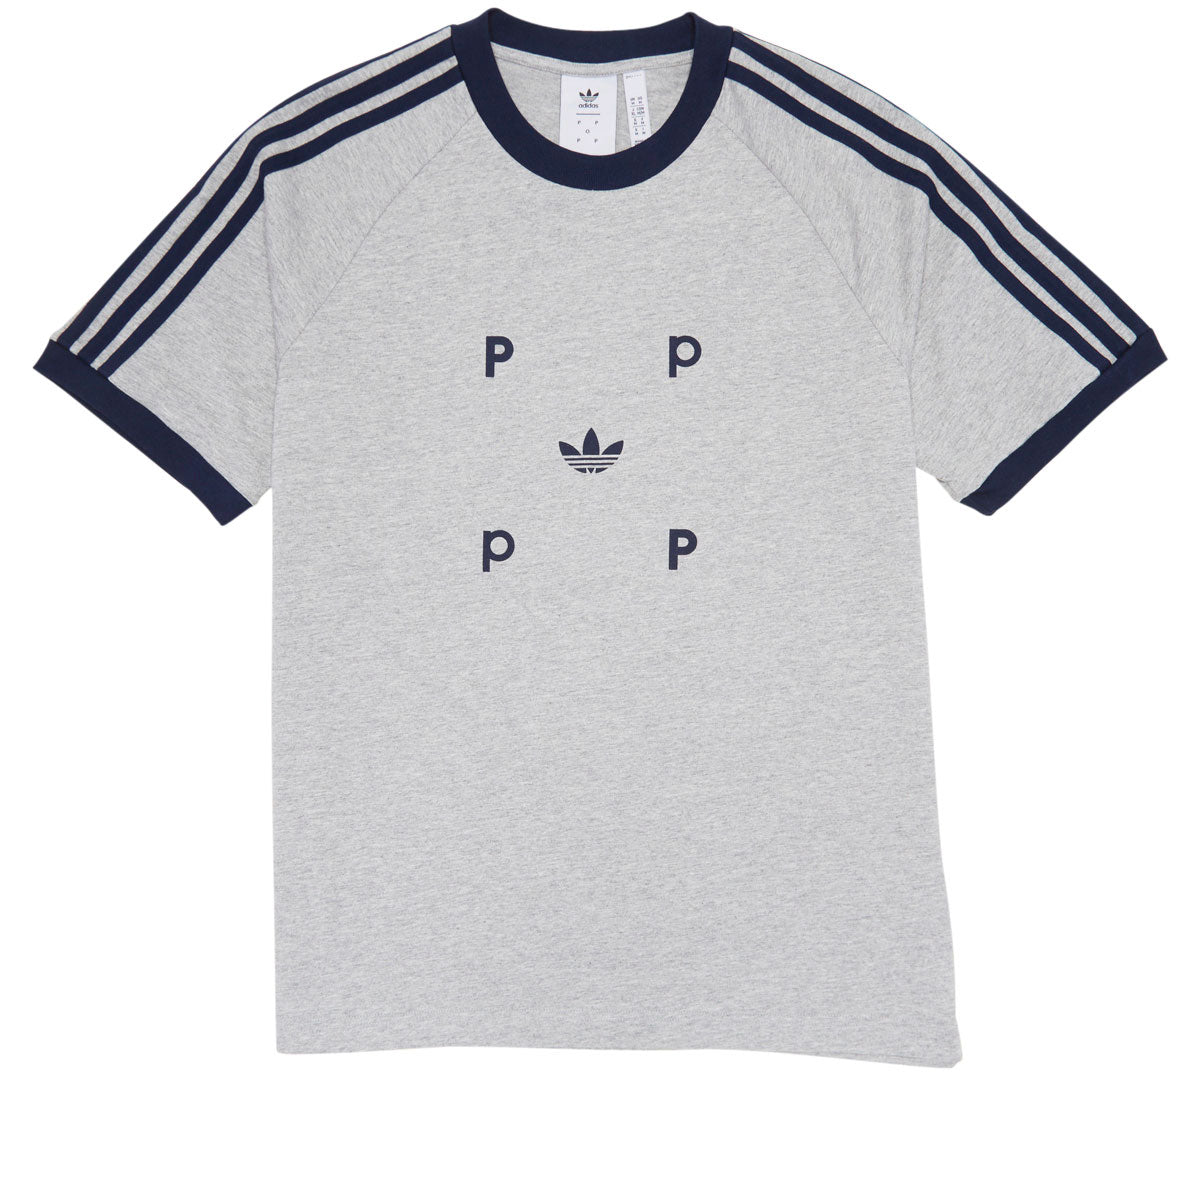 Adidas x Pop Trading Co Classic T-Shirt - Medium Grey Heather/Collegiate Navy image 1